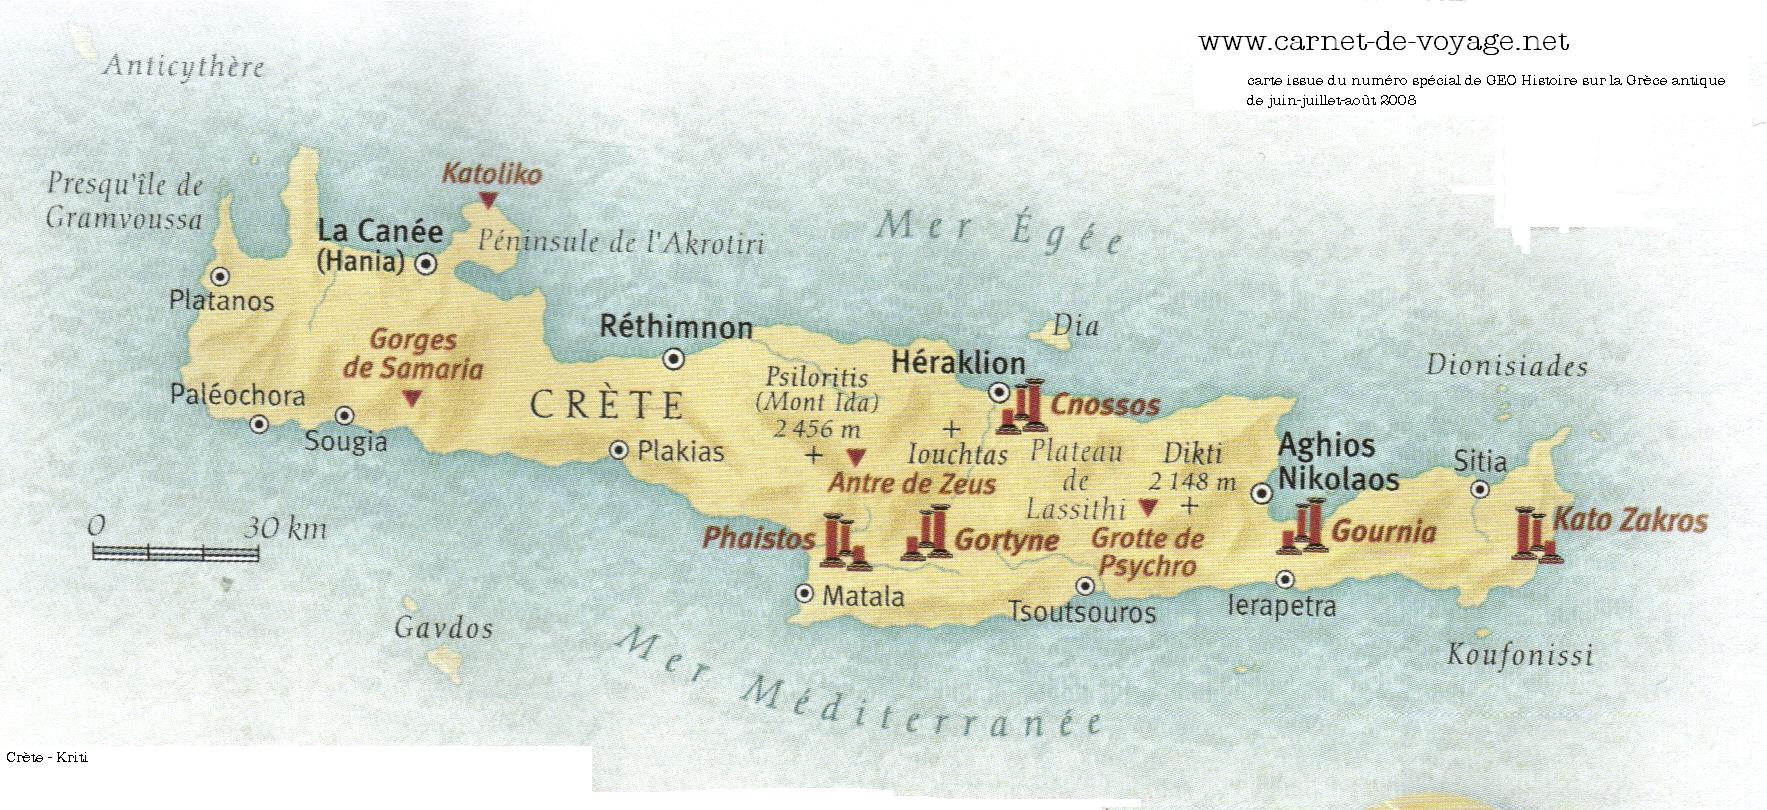 carnet_voyage_grece_crete_minos_minoen_carte_map